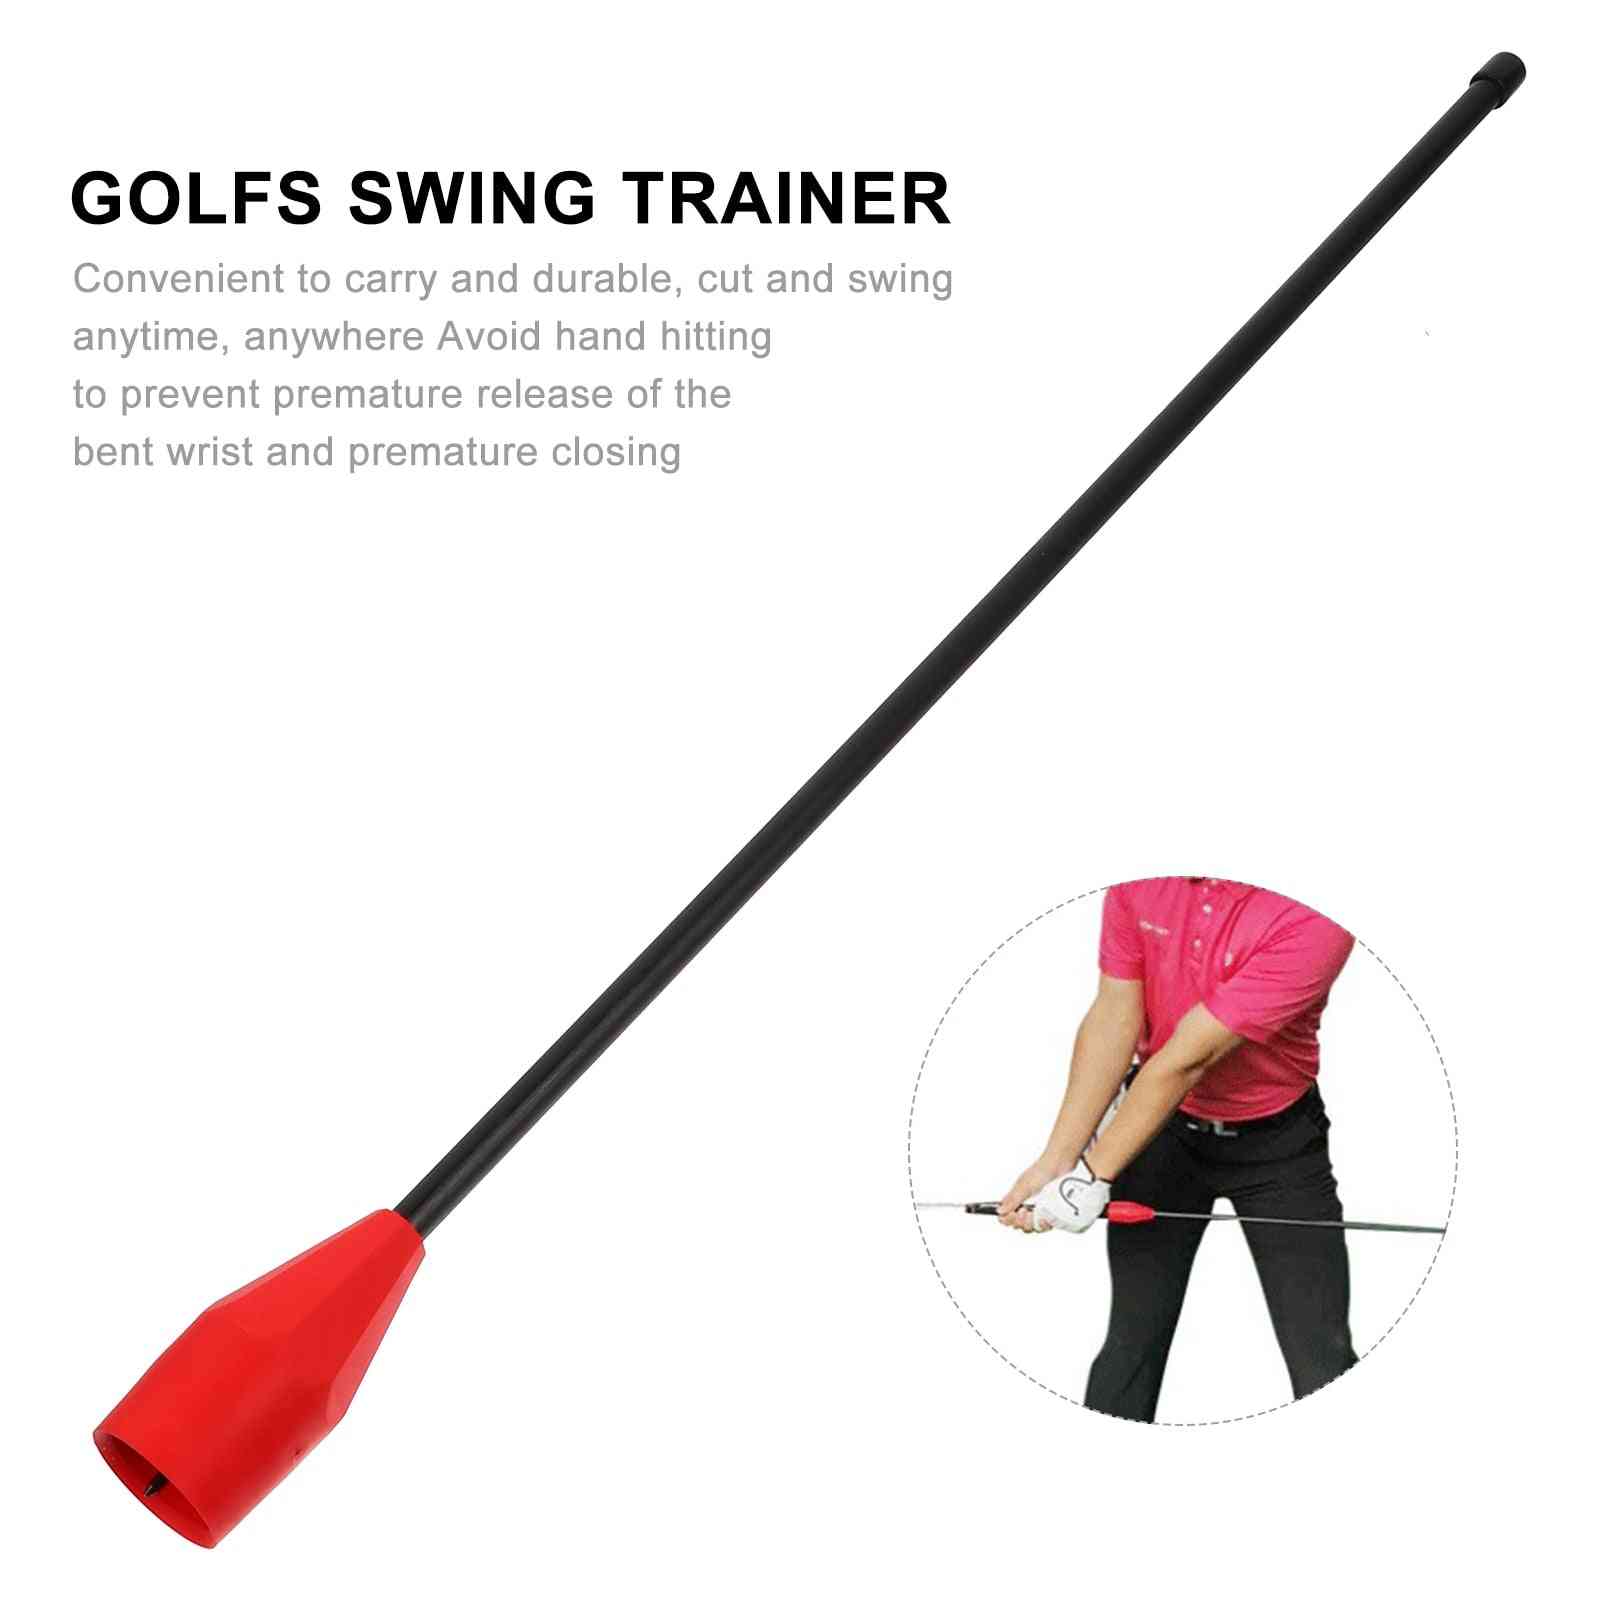 Outdoor golfs trainingshulpmiddelen, swing trainer golfaccessoires